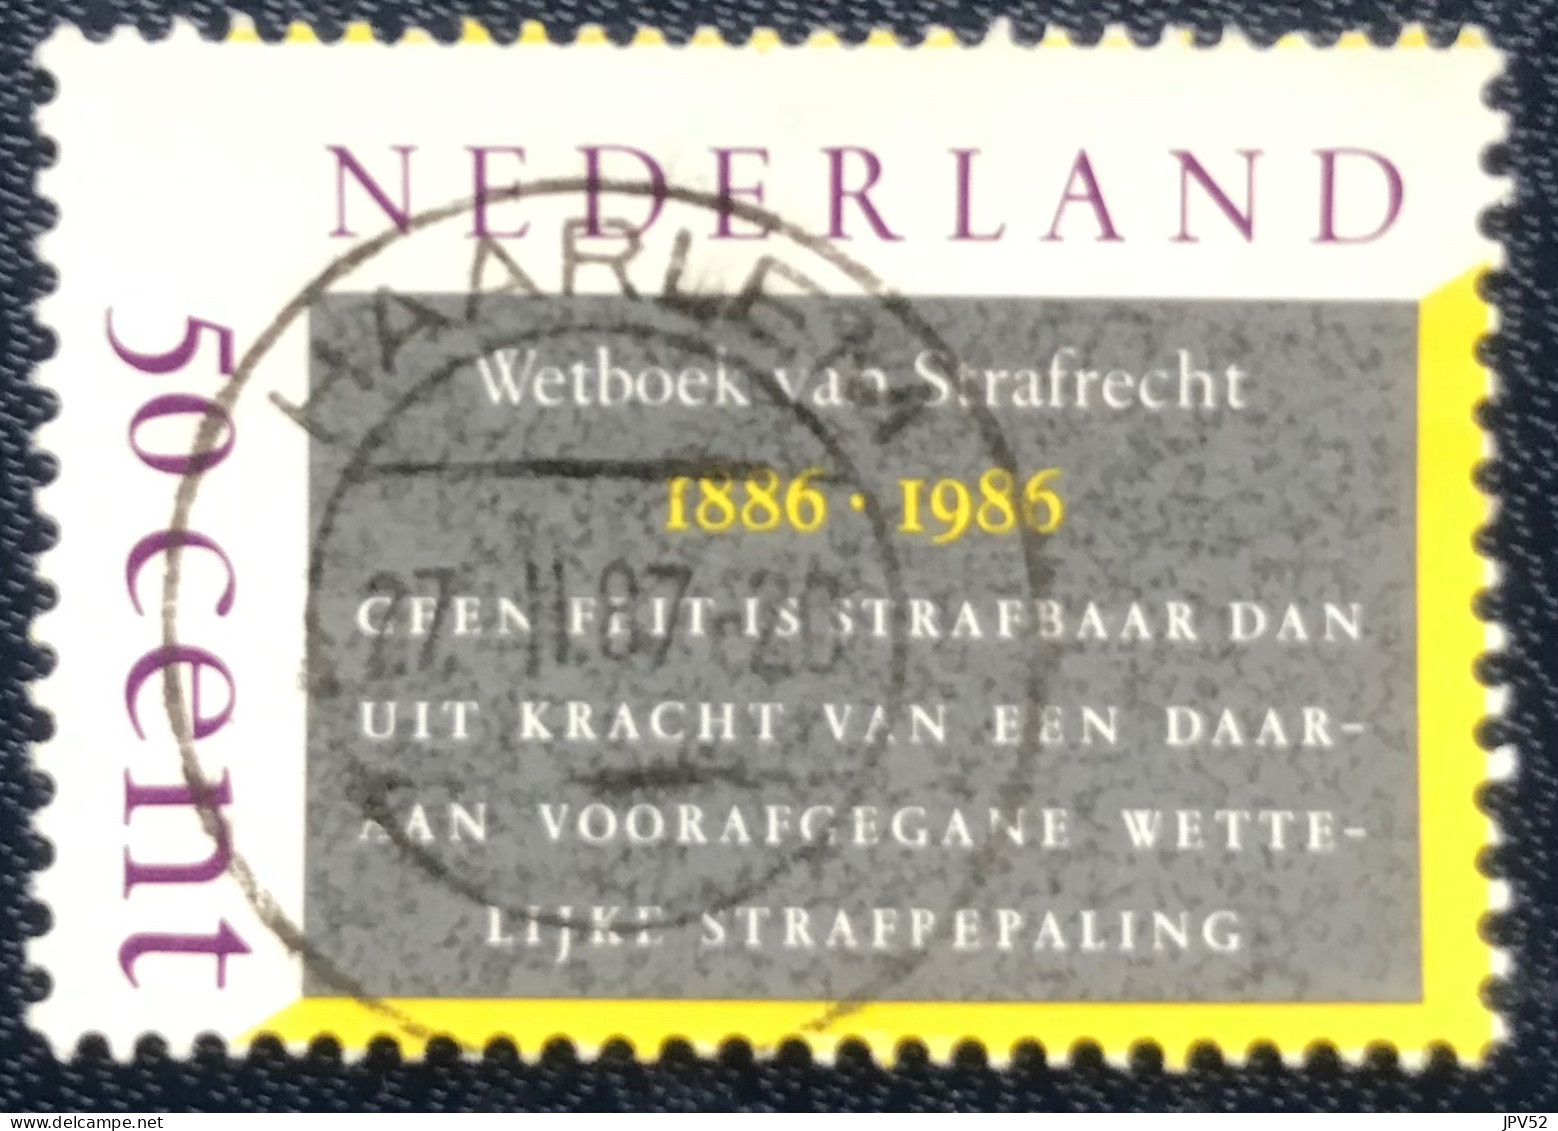 Nederland - C1/24 - 1985 - (°)used - Michel 1285 - 100j Wetboek Van Strafrecht - HAARLEM - Used Stamps